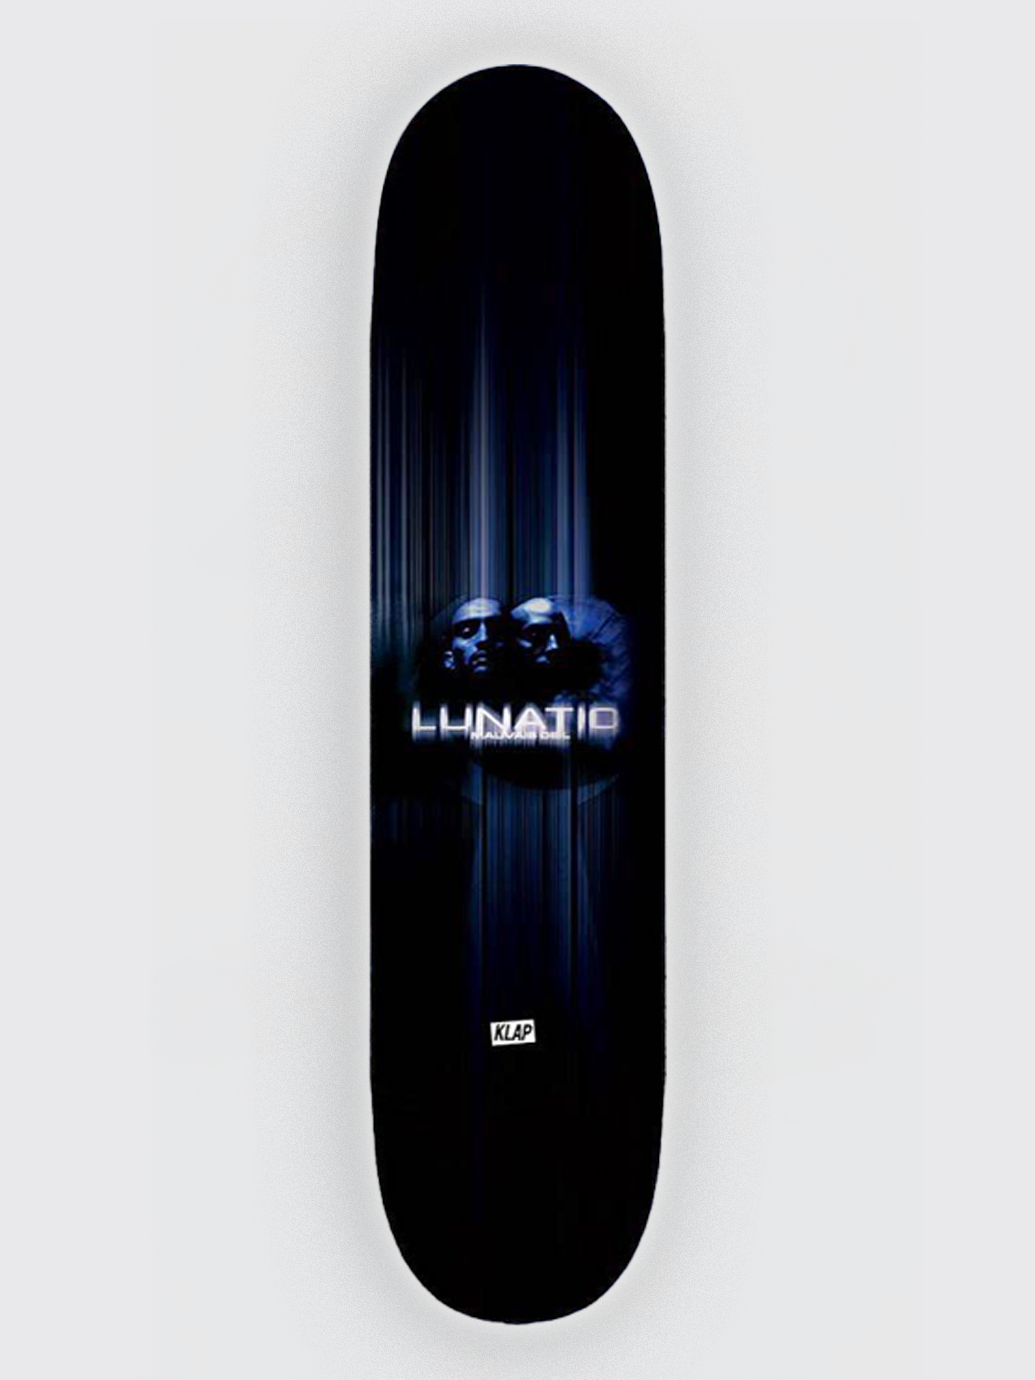 Pre-order - Skateboard LUNATIC - Limited Editions